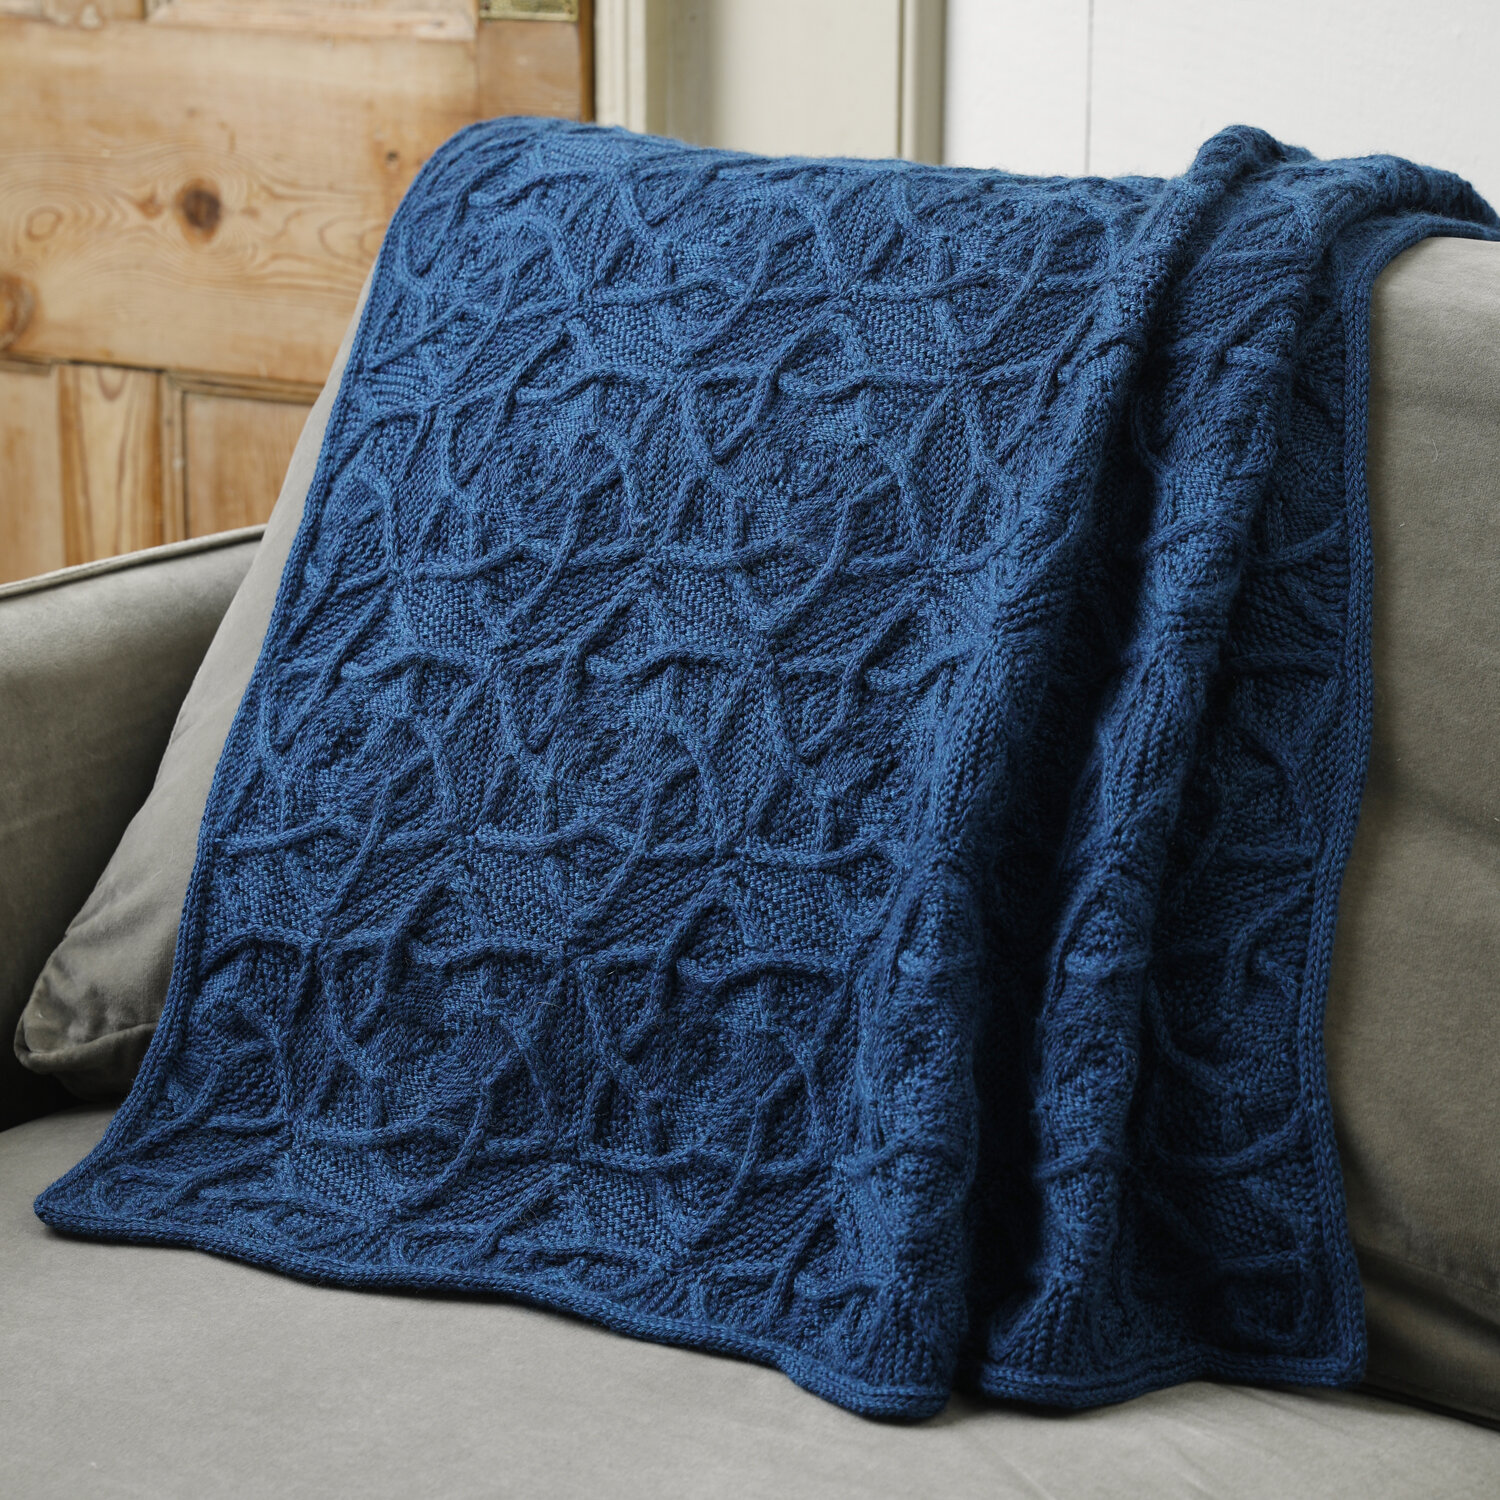 Pleione Blanket by Lucy Hague